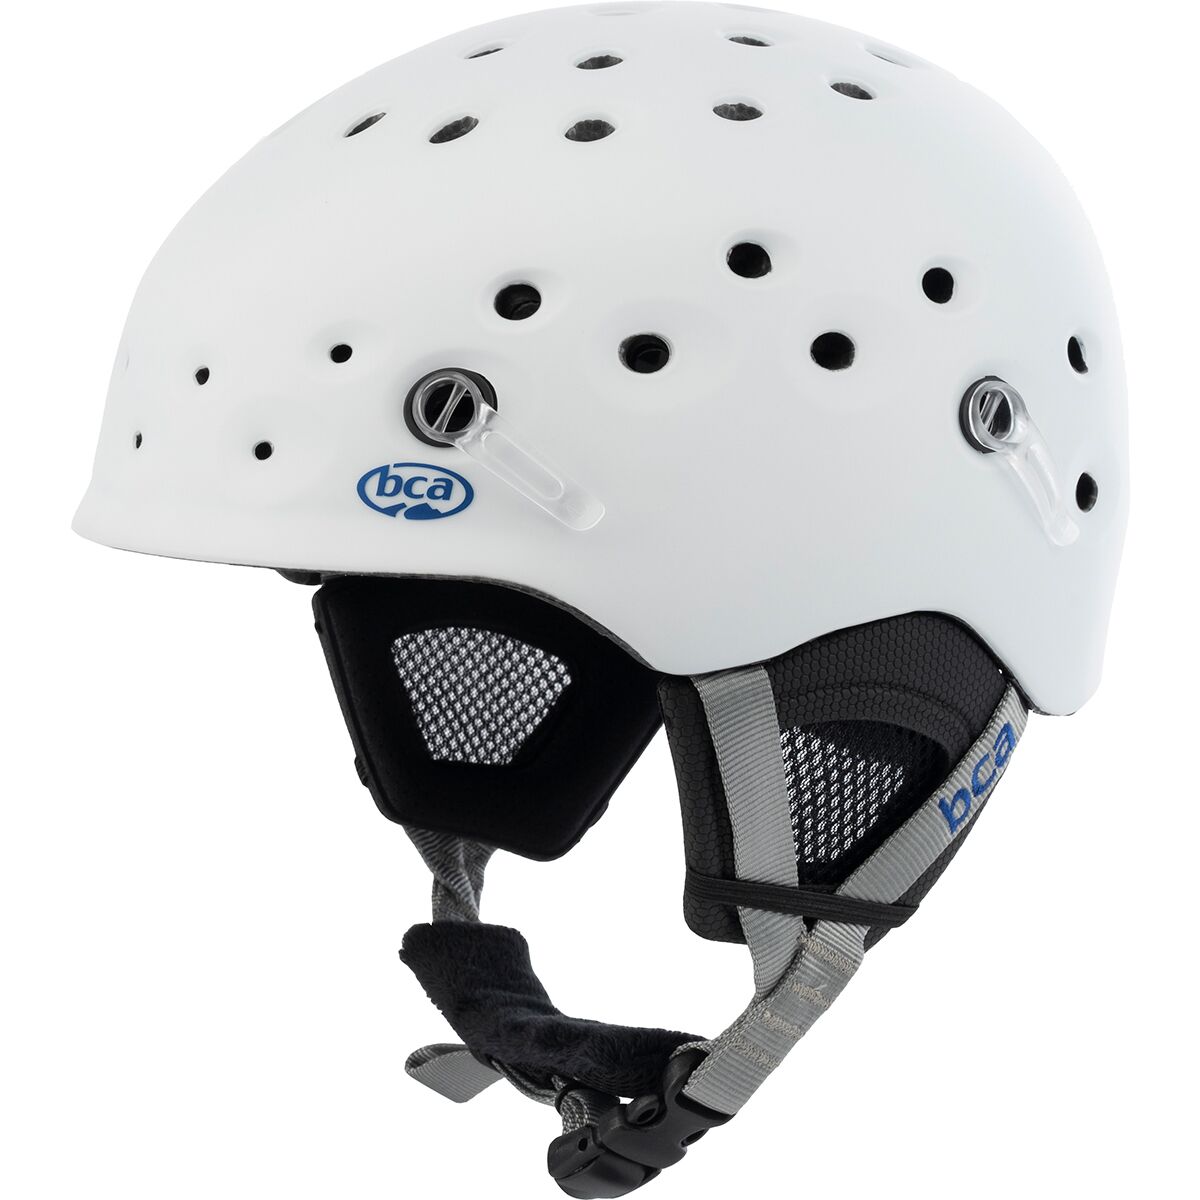 Backcountry Access BC Air Helmet White